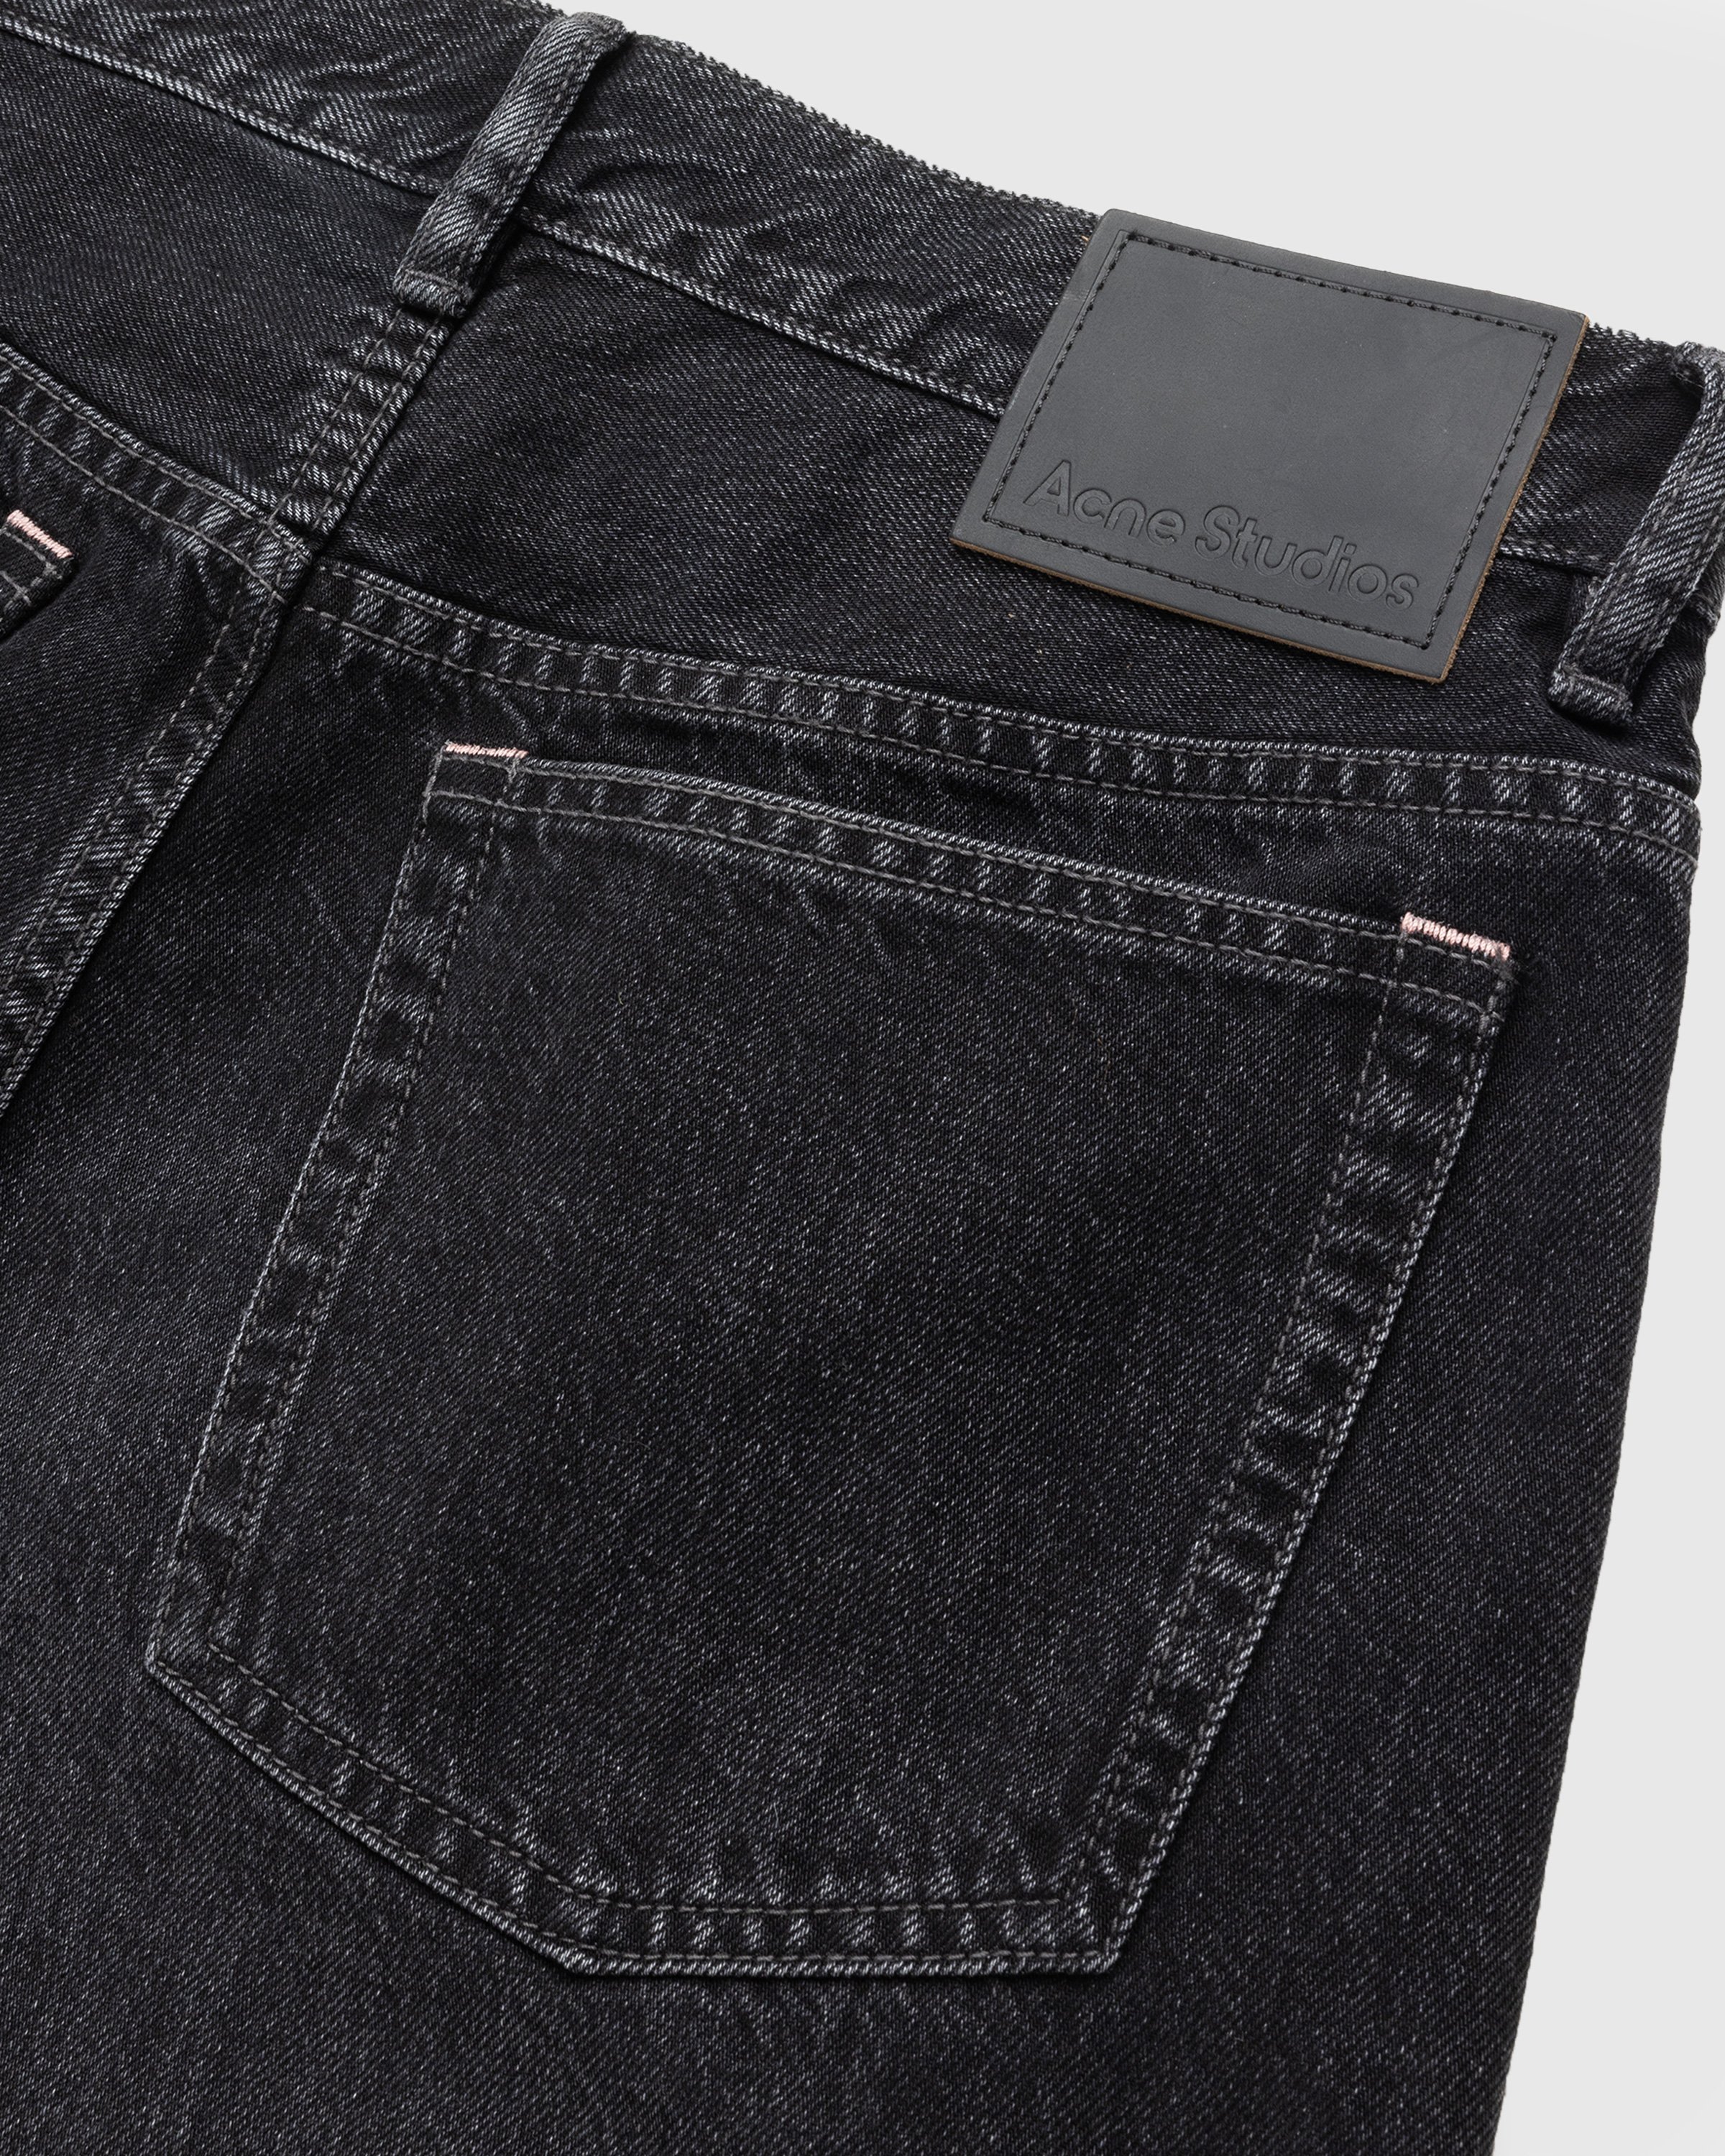 Acne Studios - Loose Fit Jeans 2021 Vintage Black - Clothing - Black - Image 6